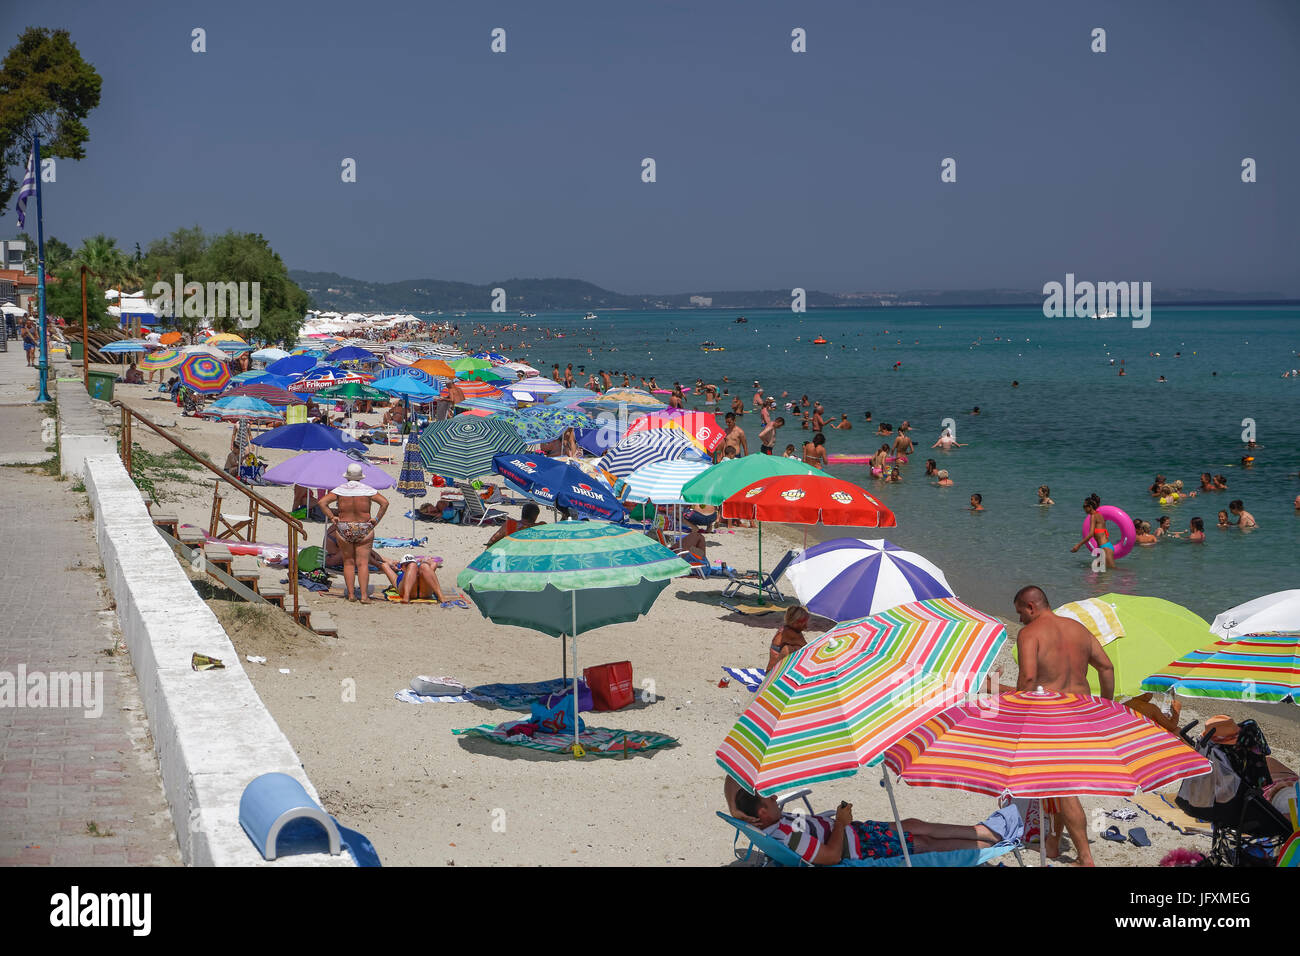 Sunbathers on a beach with beach umbrellas at Chalkidiki peninsula. Stock Photo